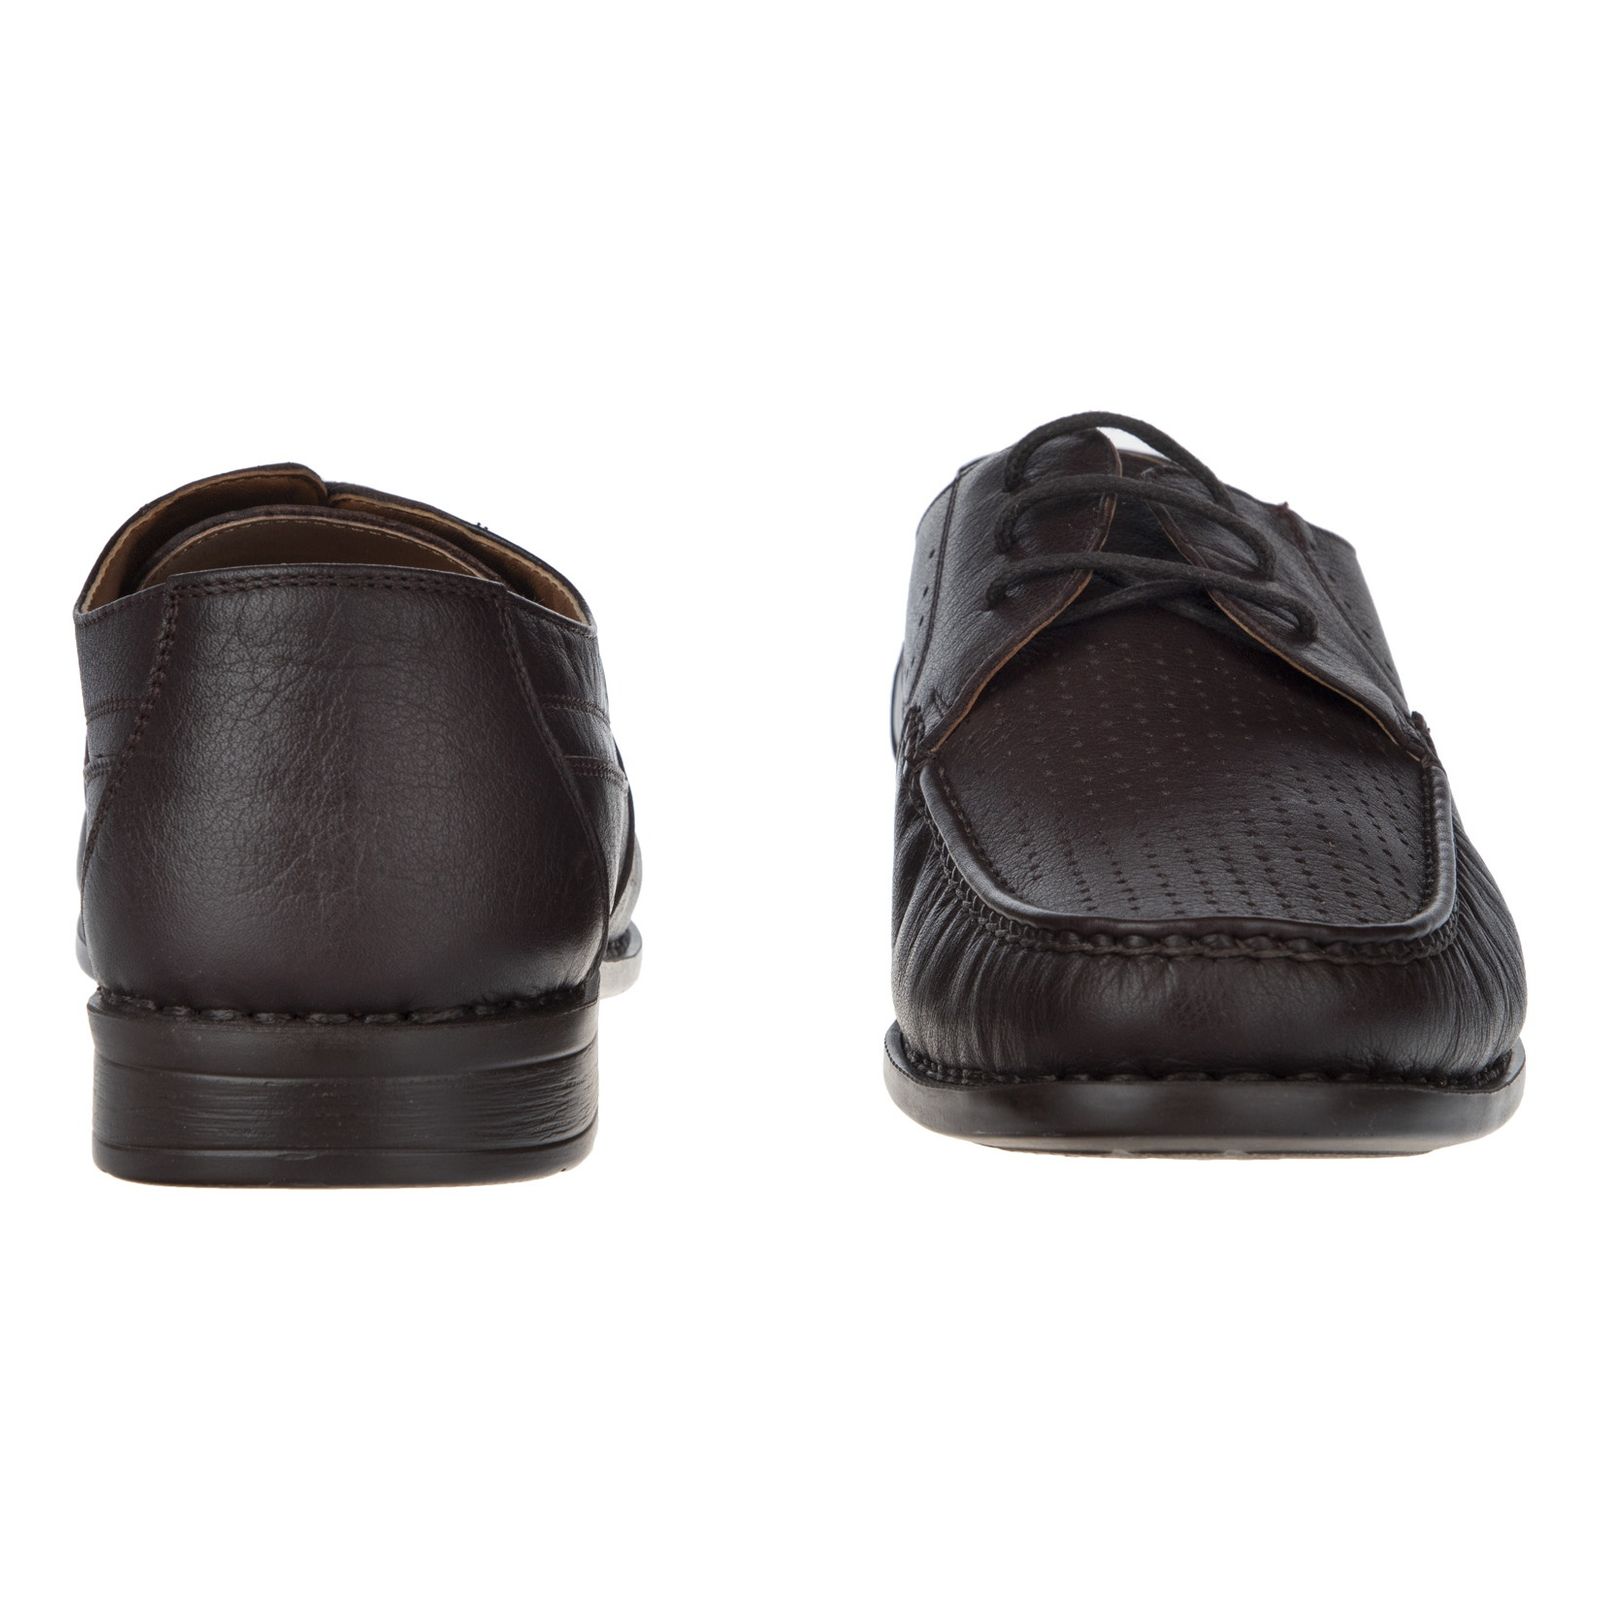 کفش روزمره مردانه پولاریس مدل 100296904-103 - قهوه ای - 5